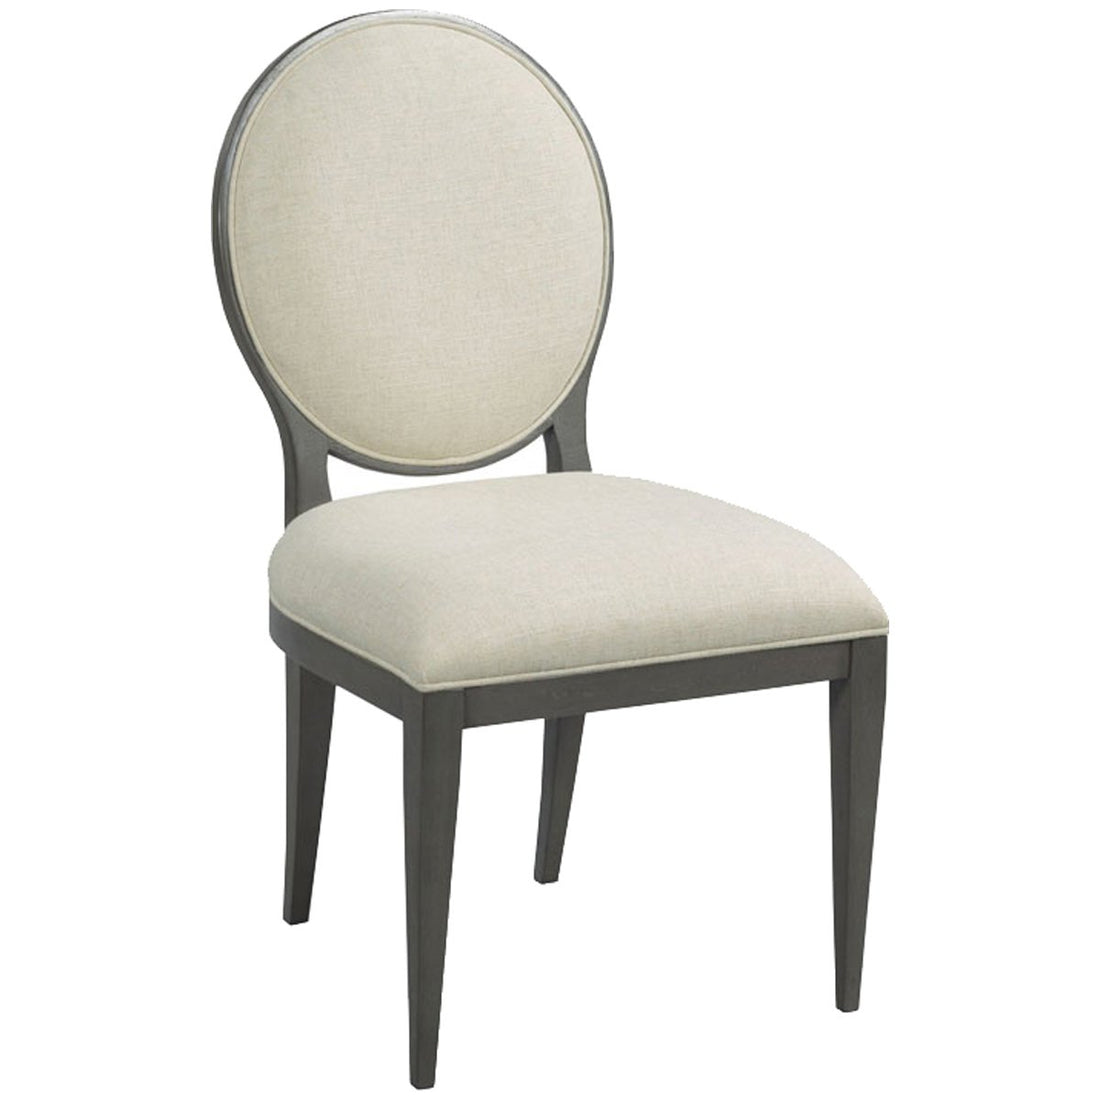 Woodbridge Furniture Ovale Side Chair, Set of 2